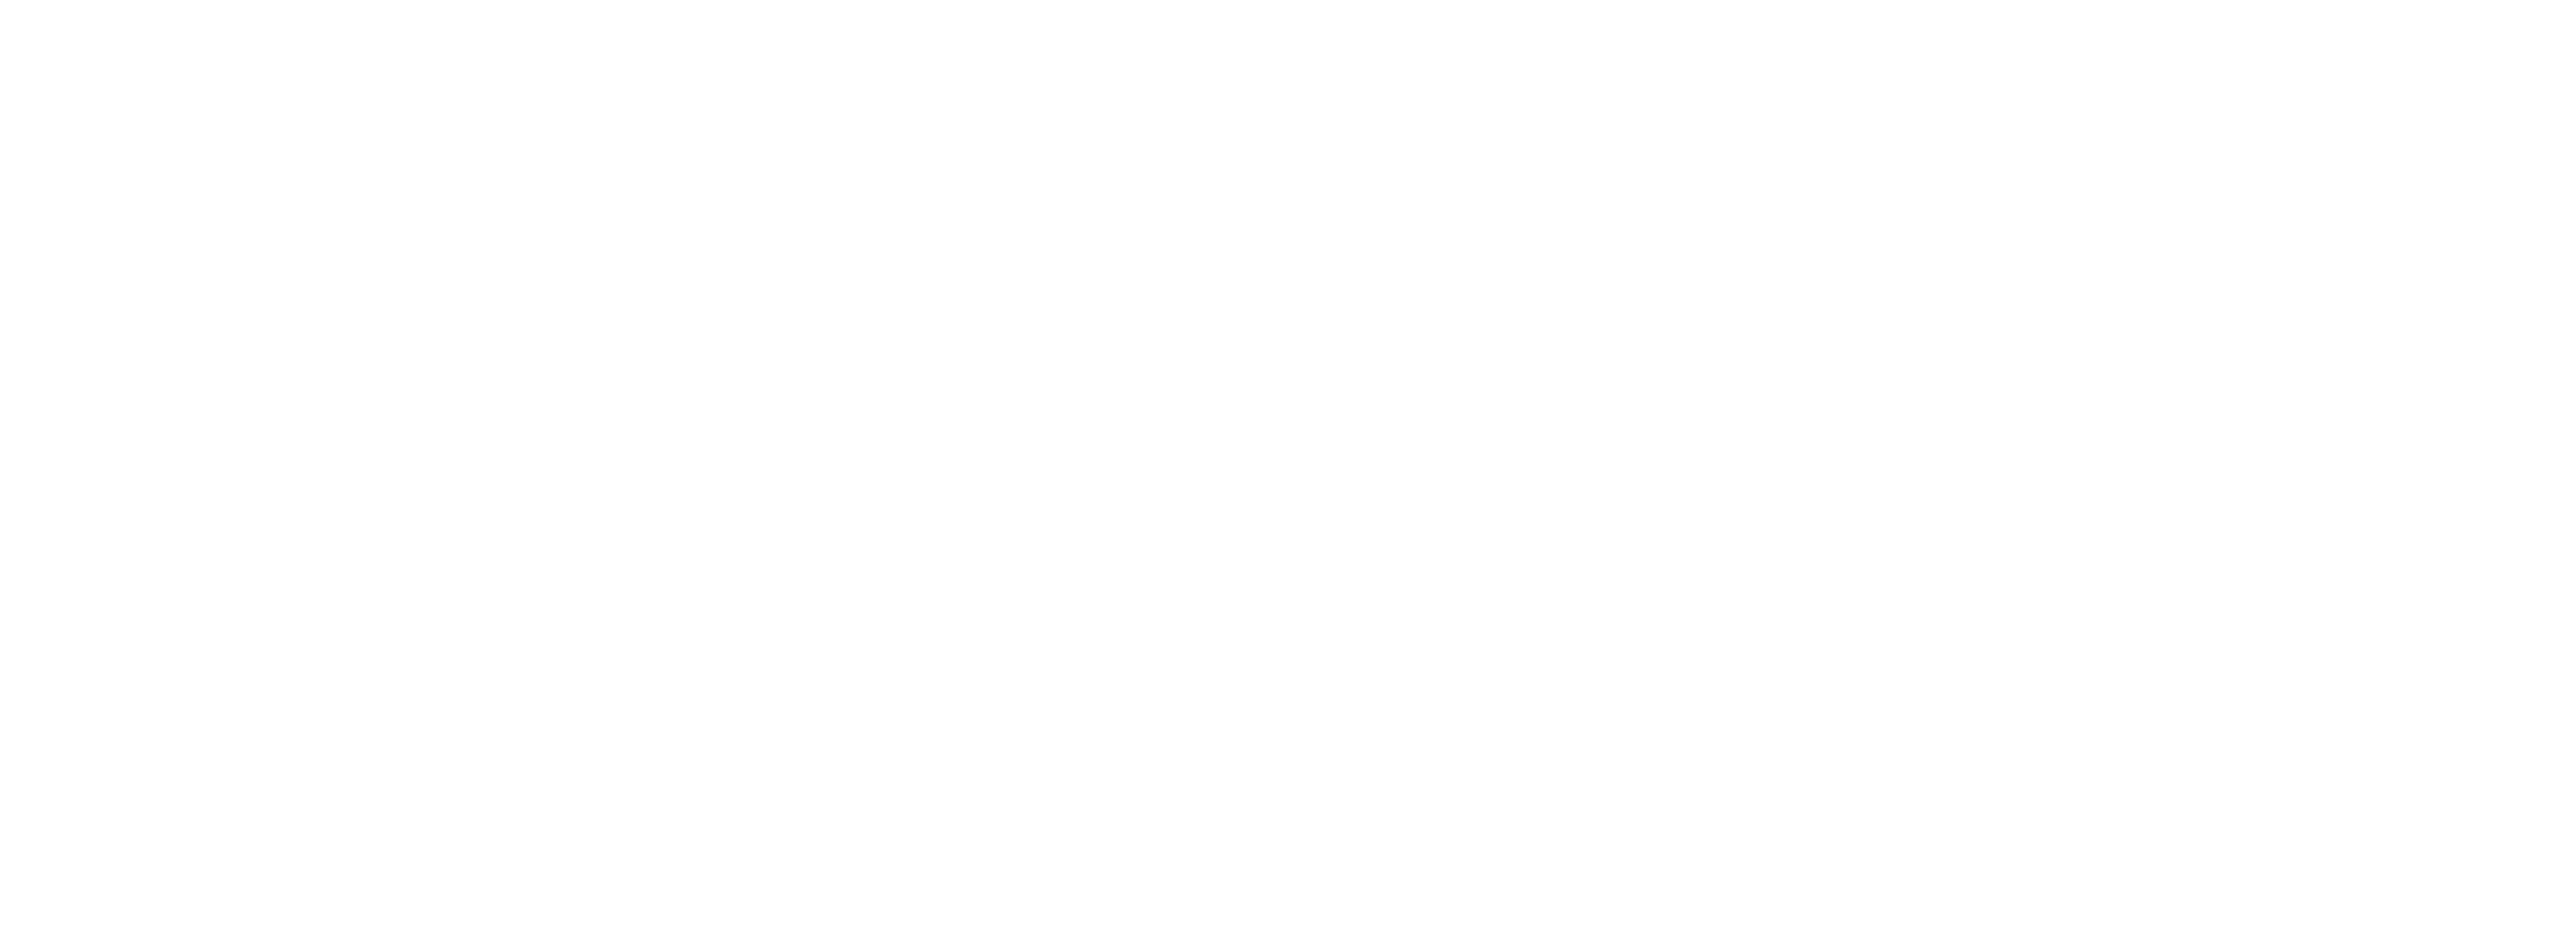 American Planning Association logo.